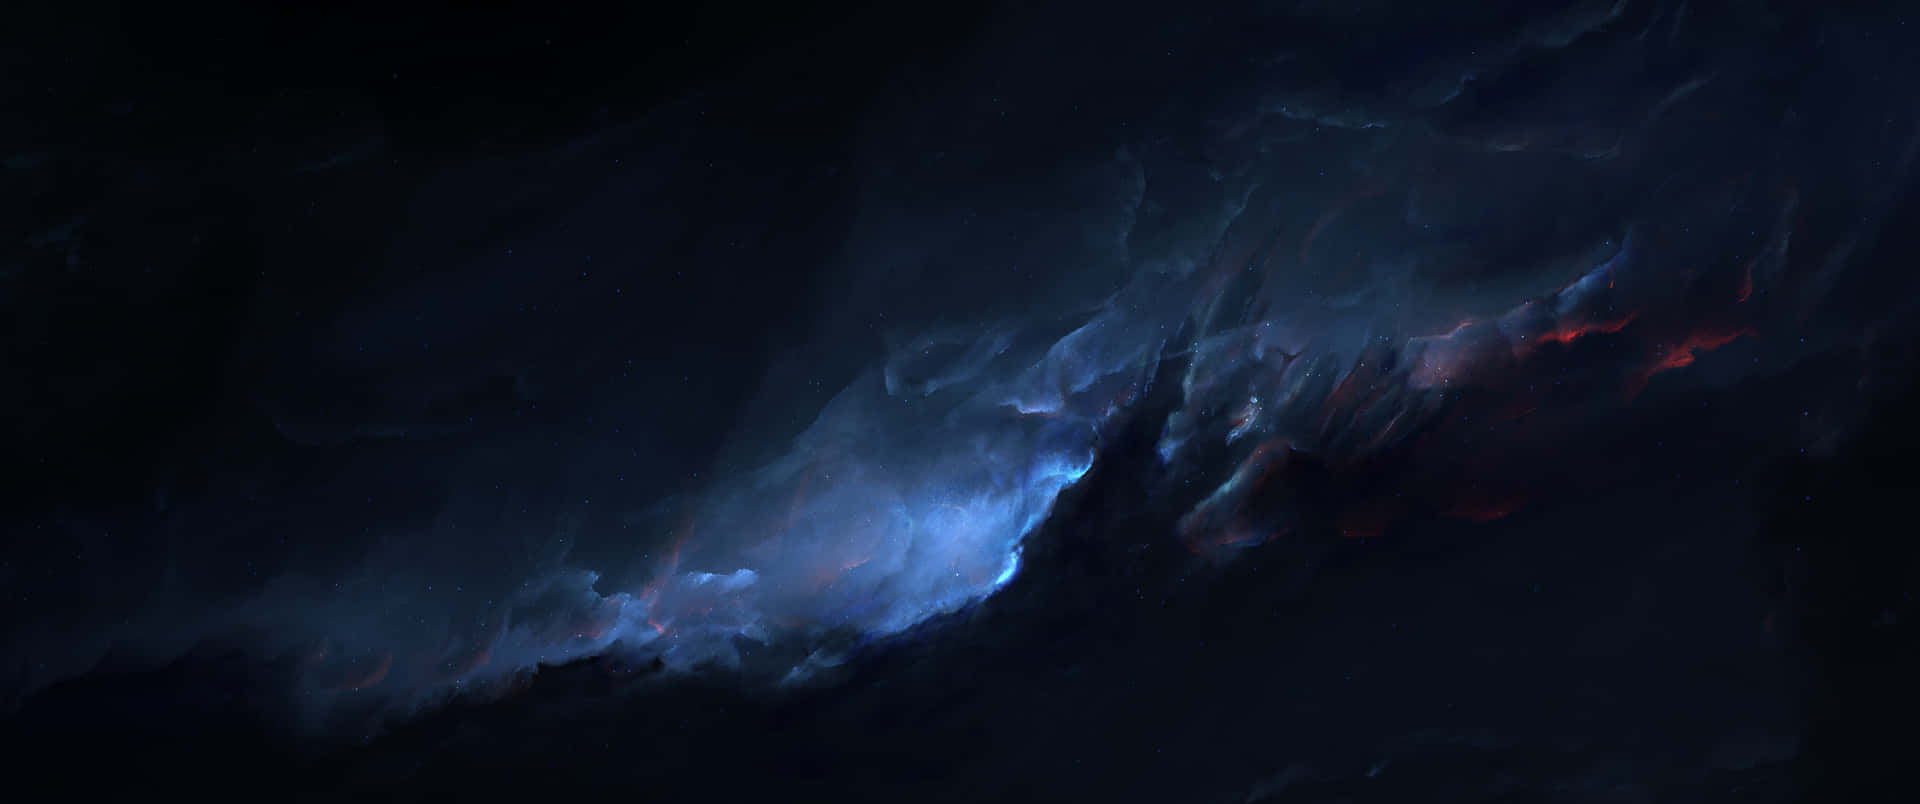 3440x1440 Space Of The Atlantis Nebula Wallpaper